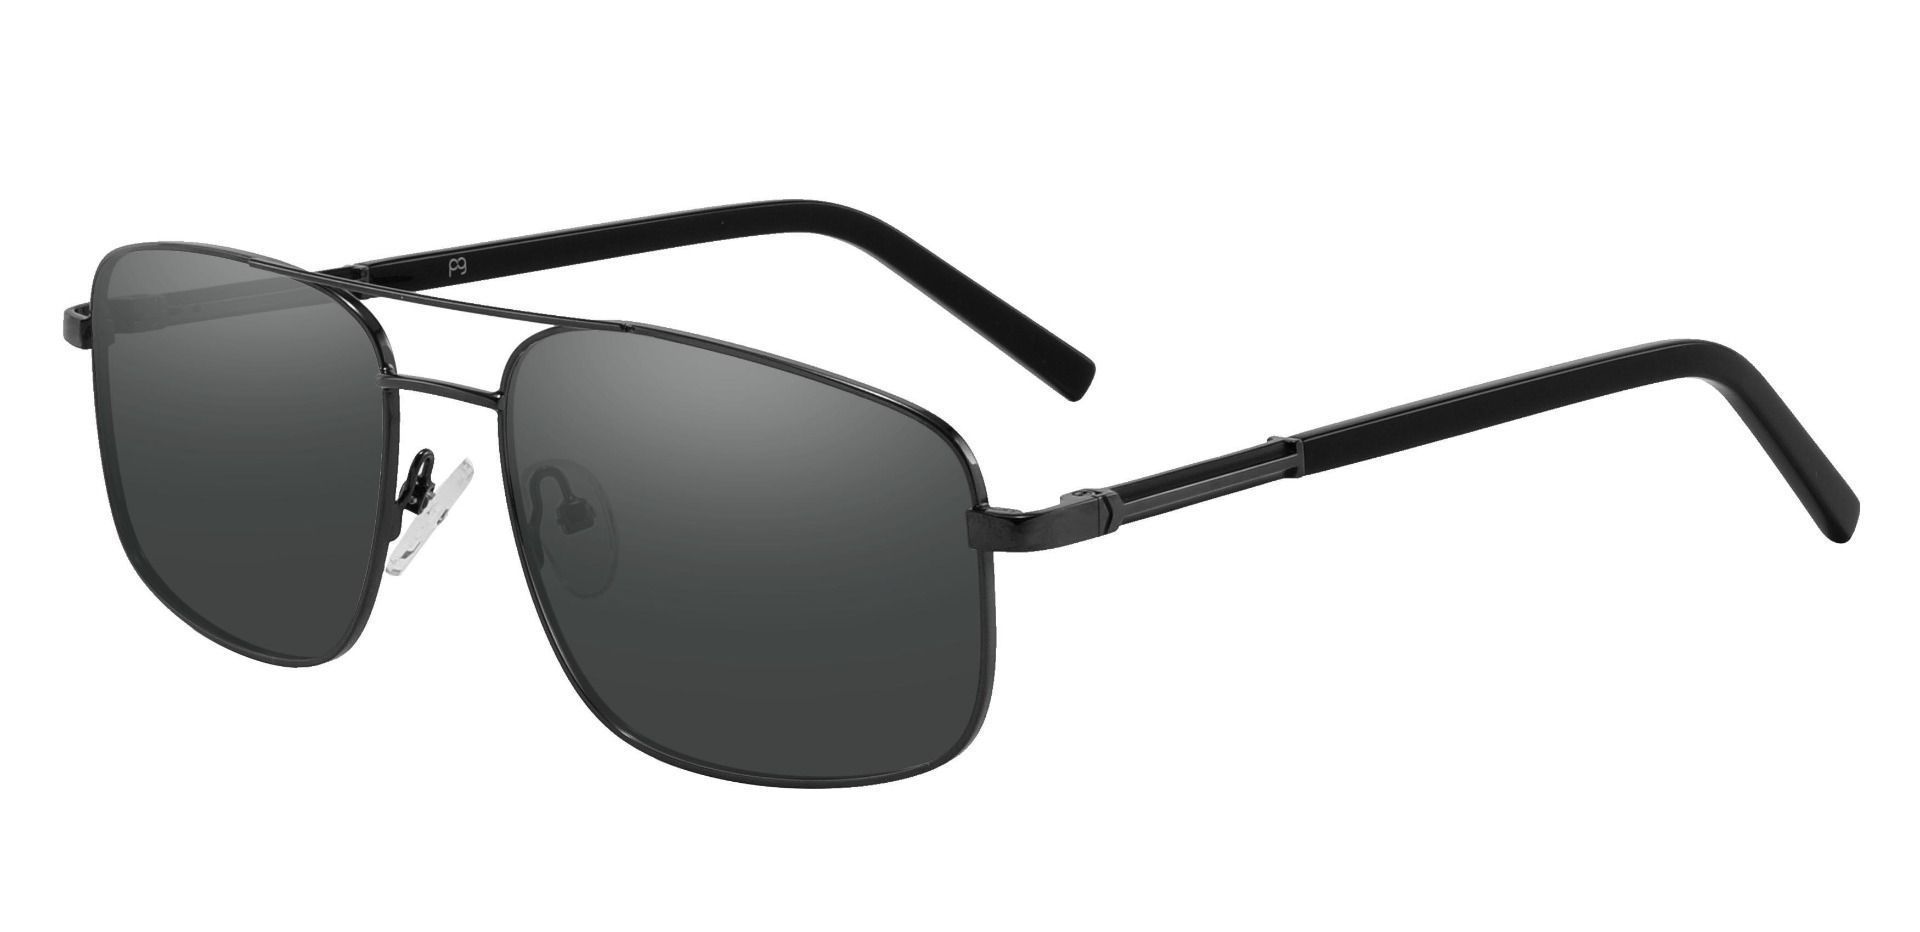 Davenport Aviator Prescription Sunglasses - Black Frame With Gray Lenses